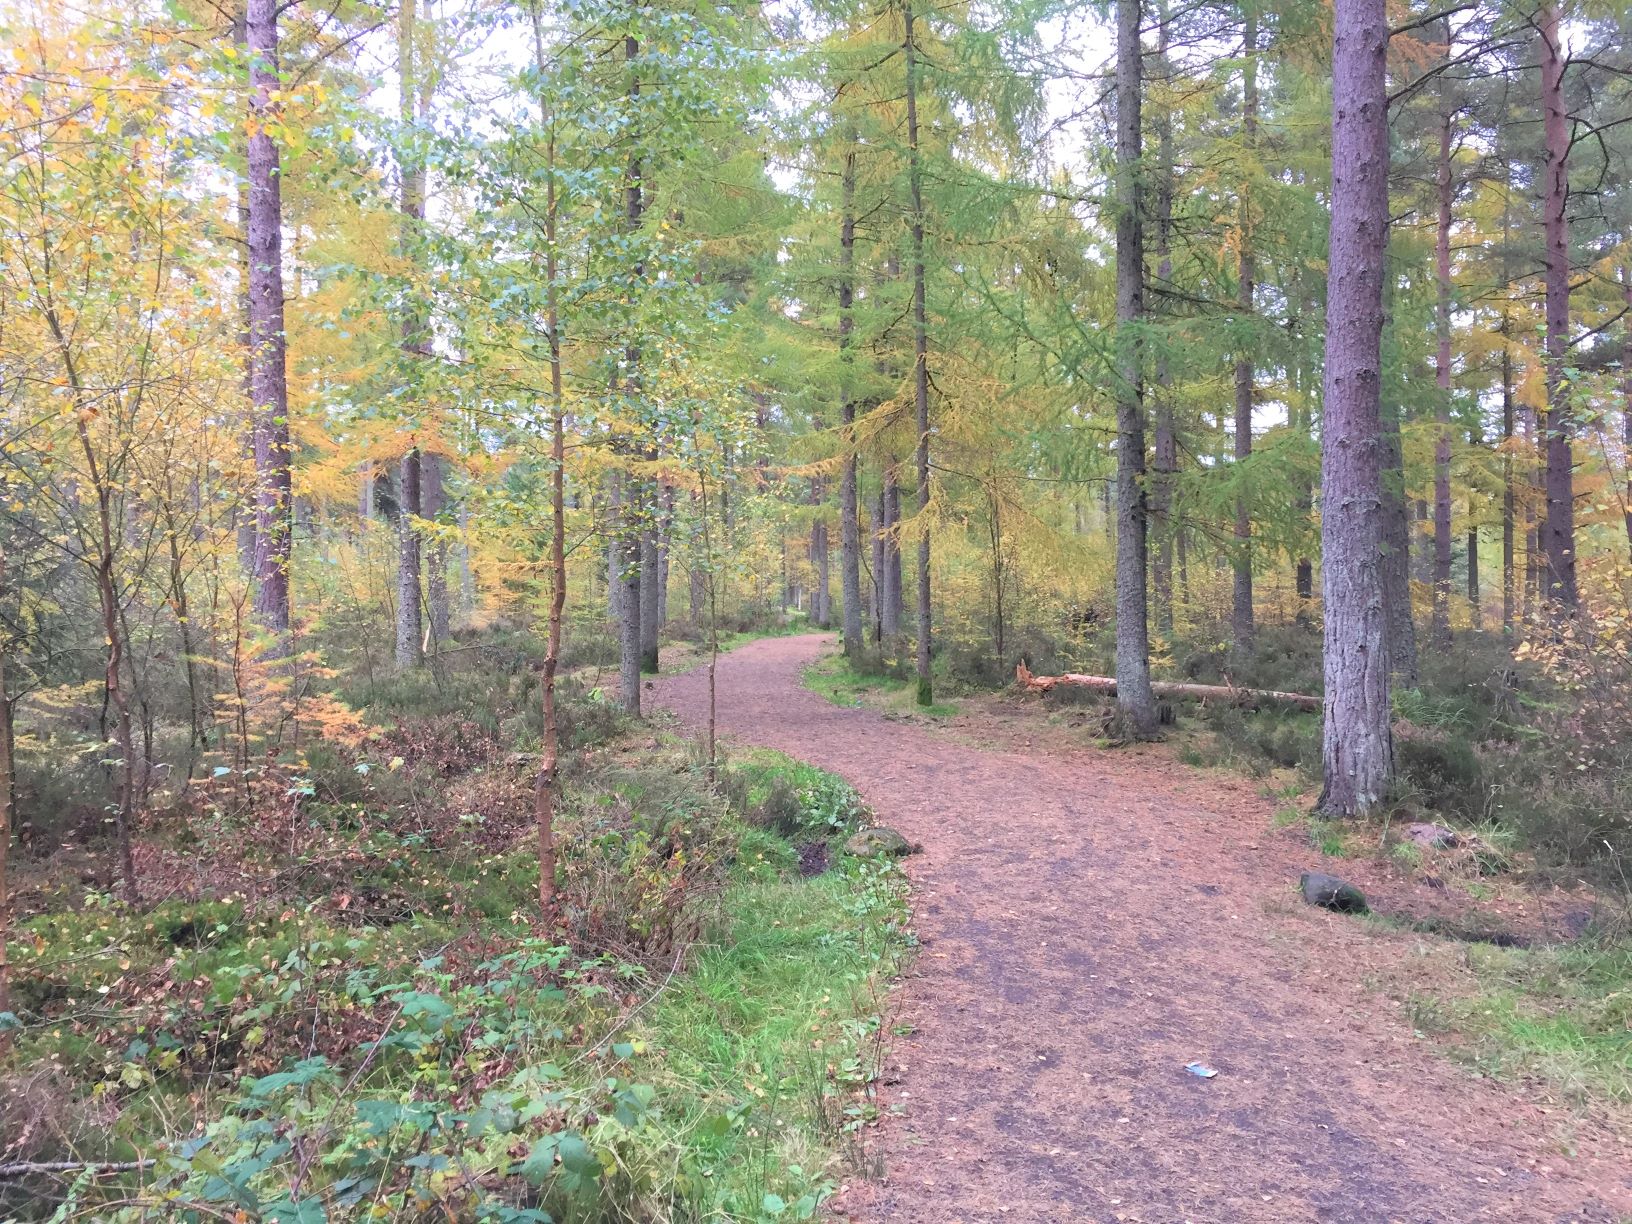 A wide footpath through a woodland of conifer trees